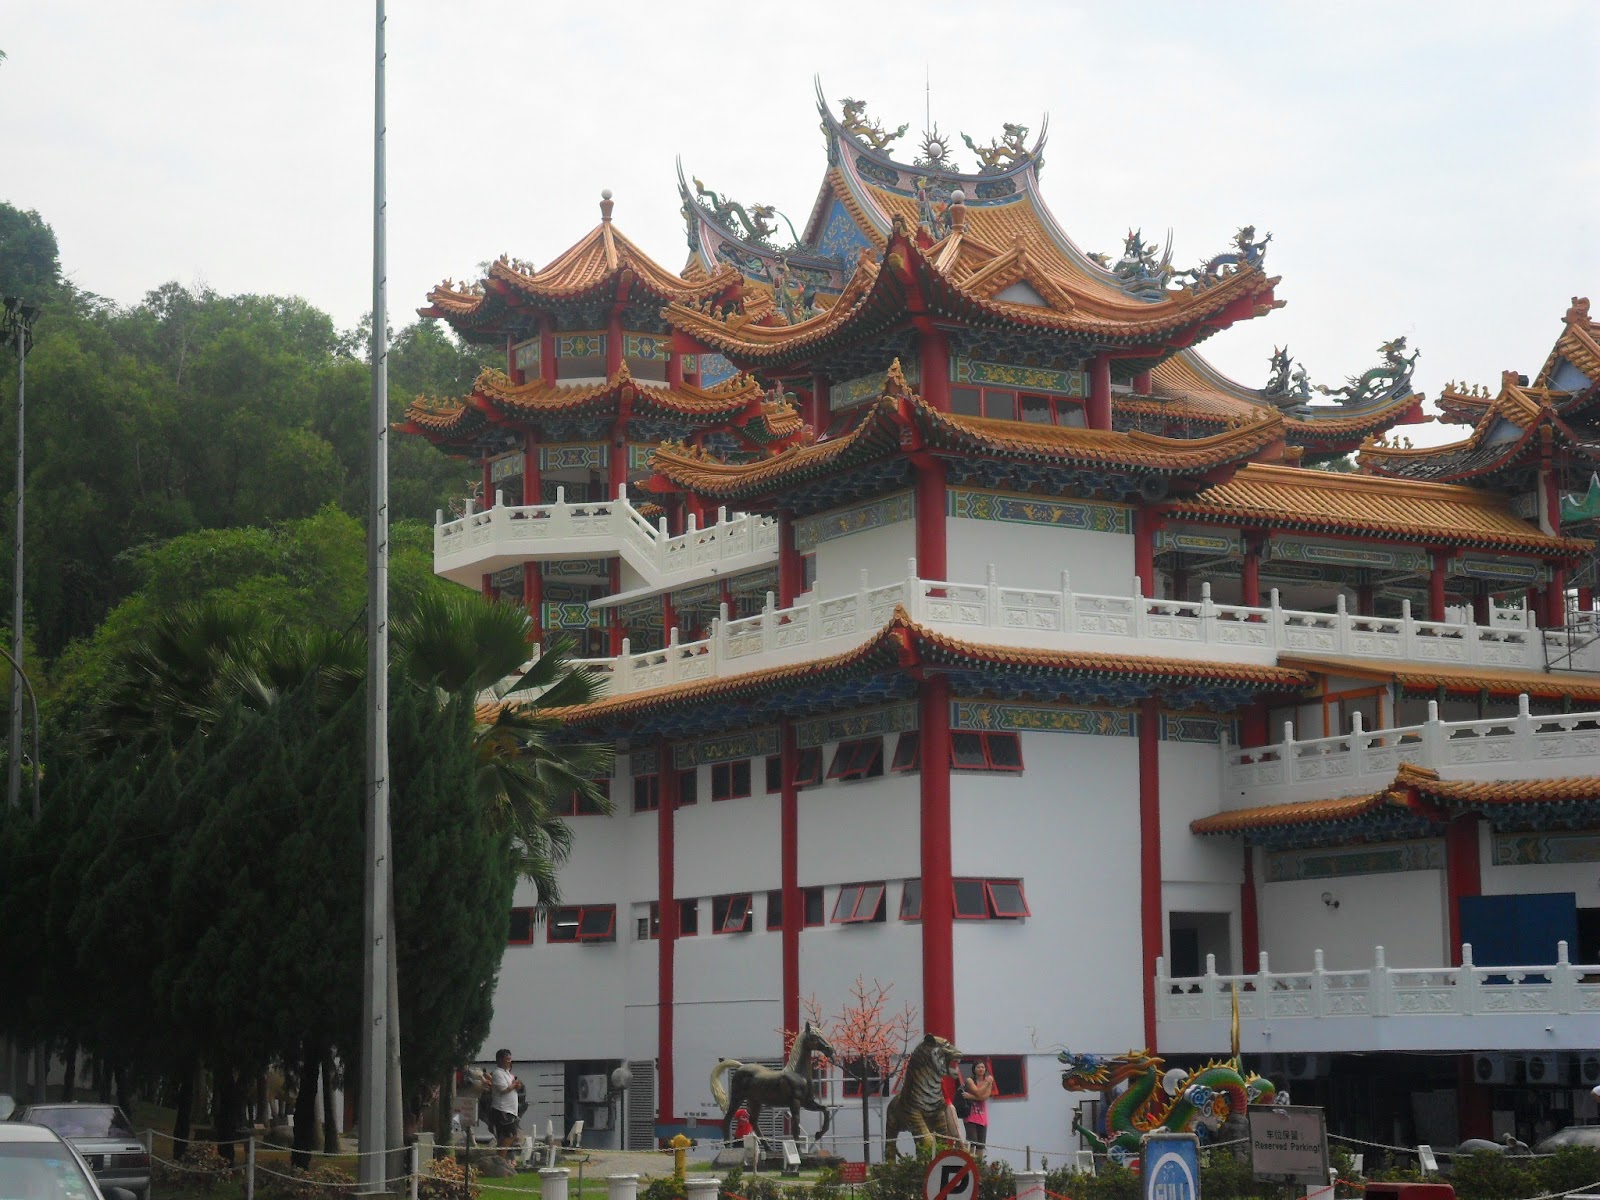 Expat Abroad: Thean Hou Chinese Temple, Kuala Lumpur